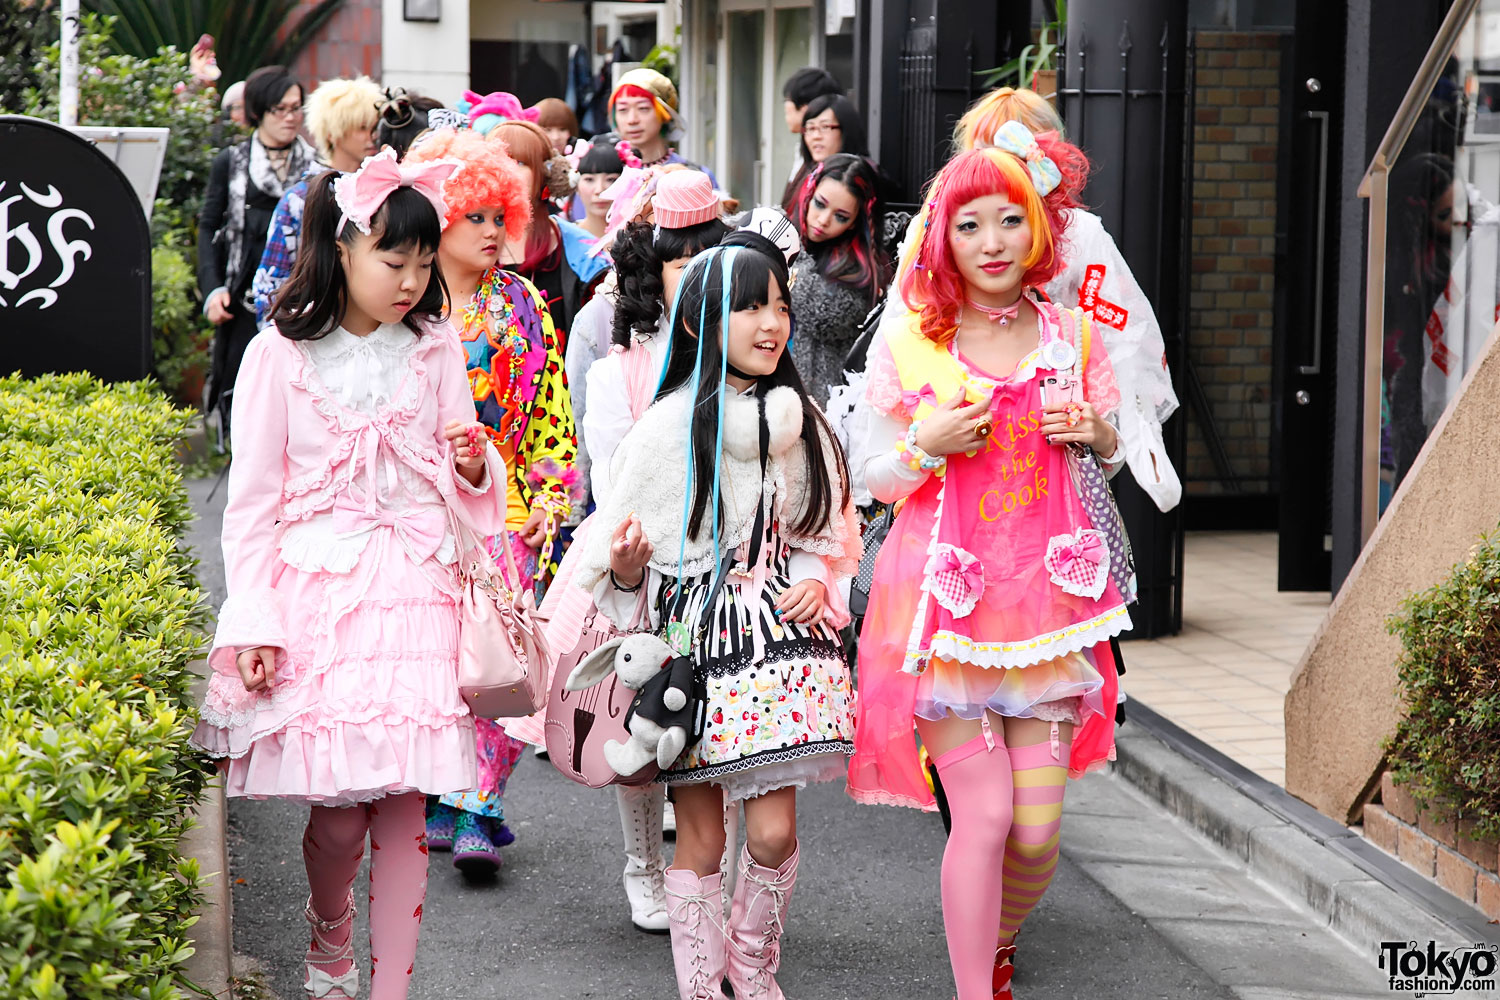 Harajuku Fashion Walk #7 - Pictures of Colorful Japanese Street Fashion on ...